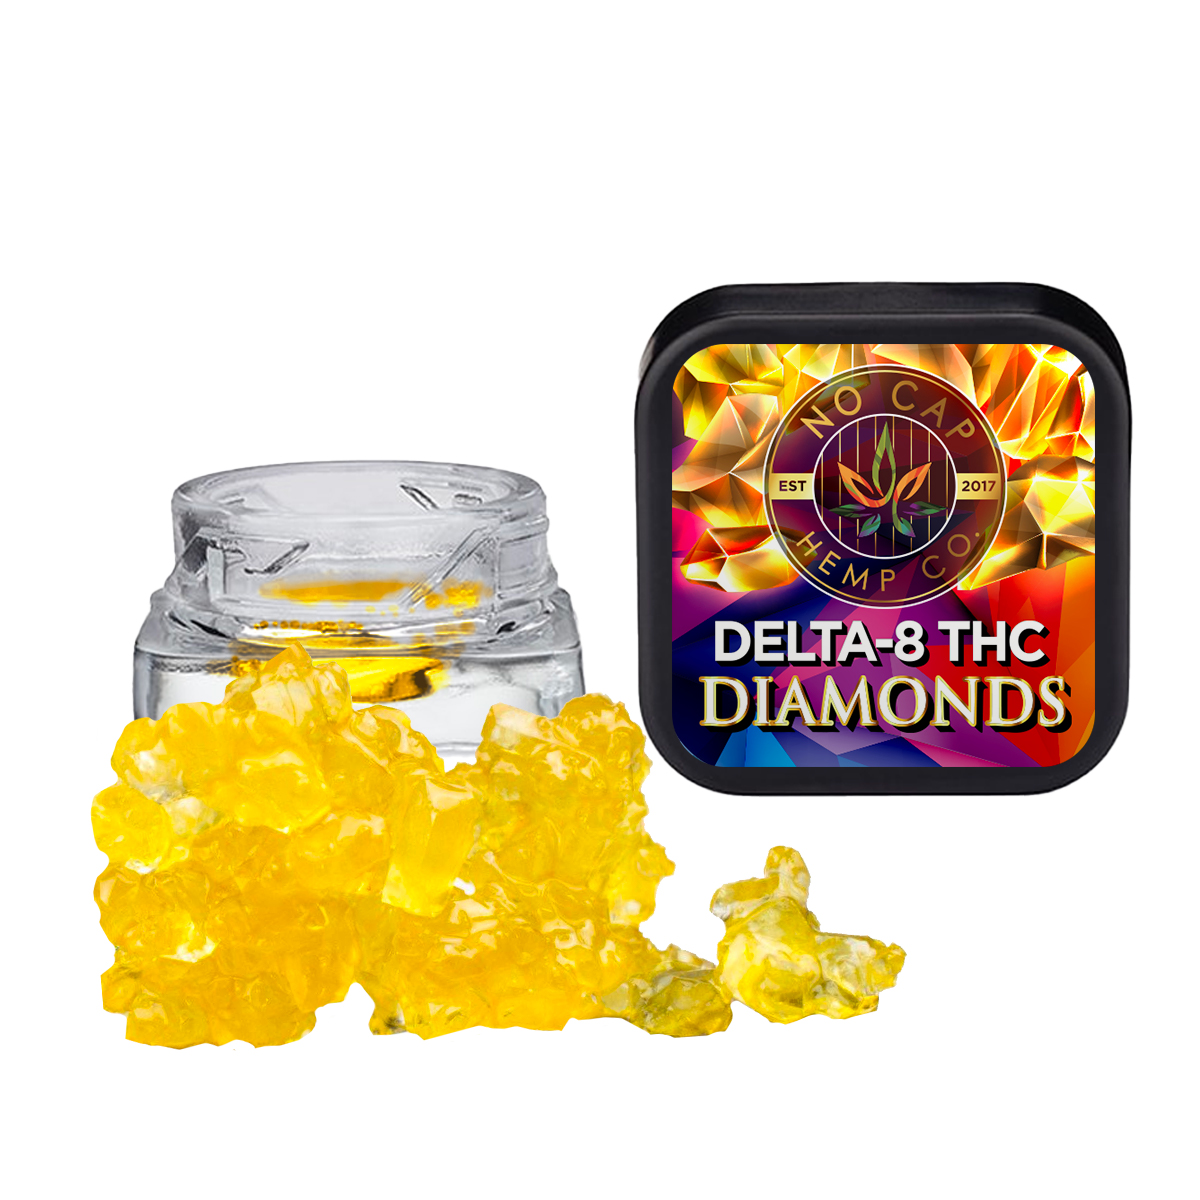 No Cap Hemp Co Delta 8 THC Diamonds - Lemon Haze